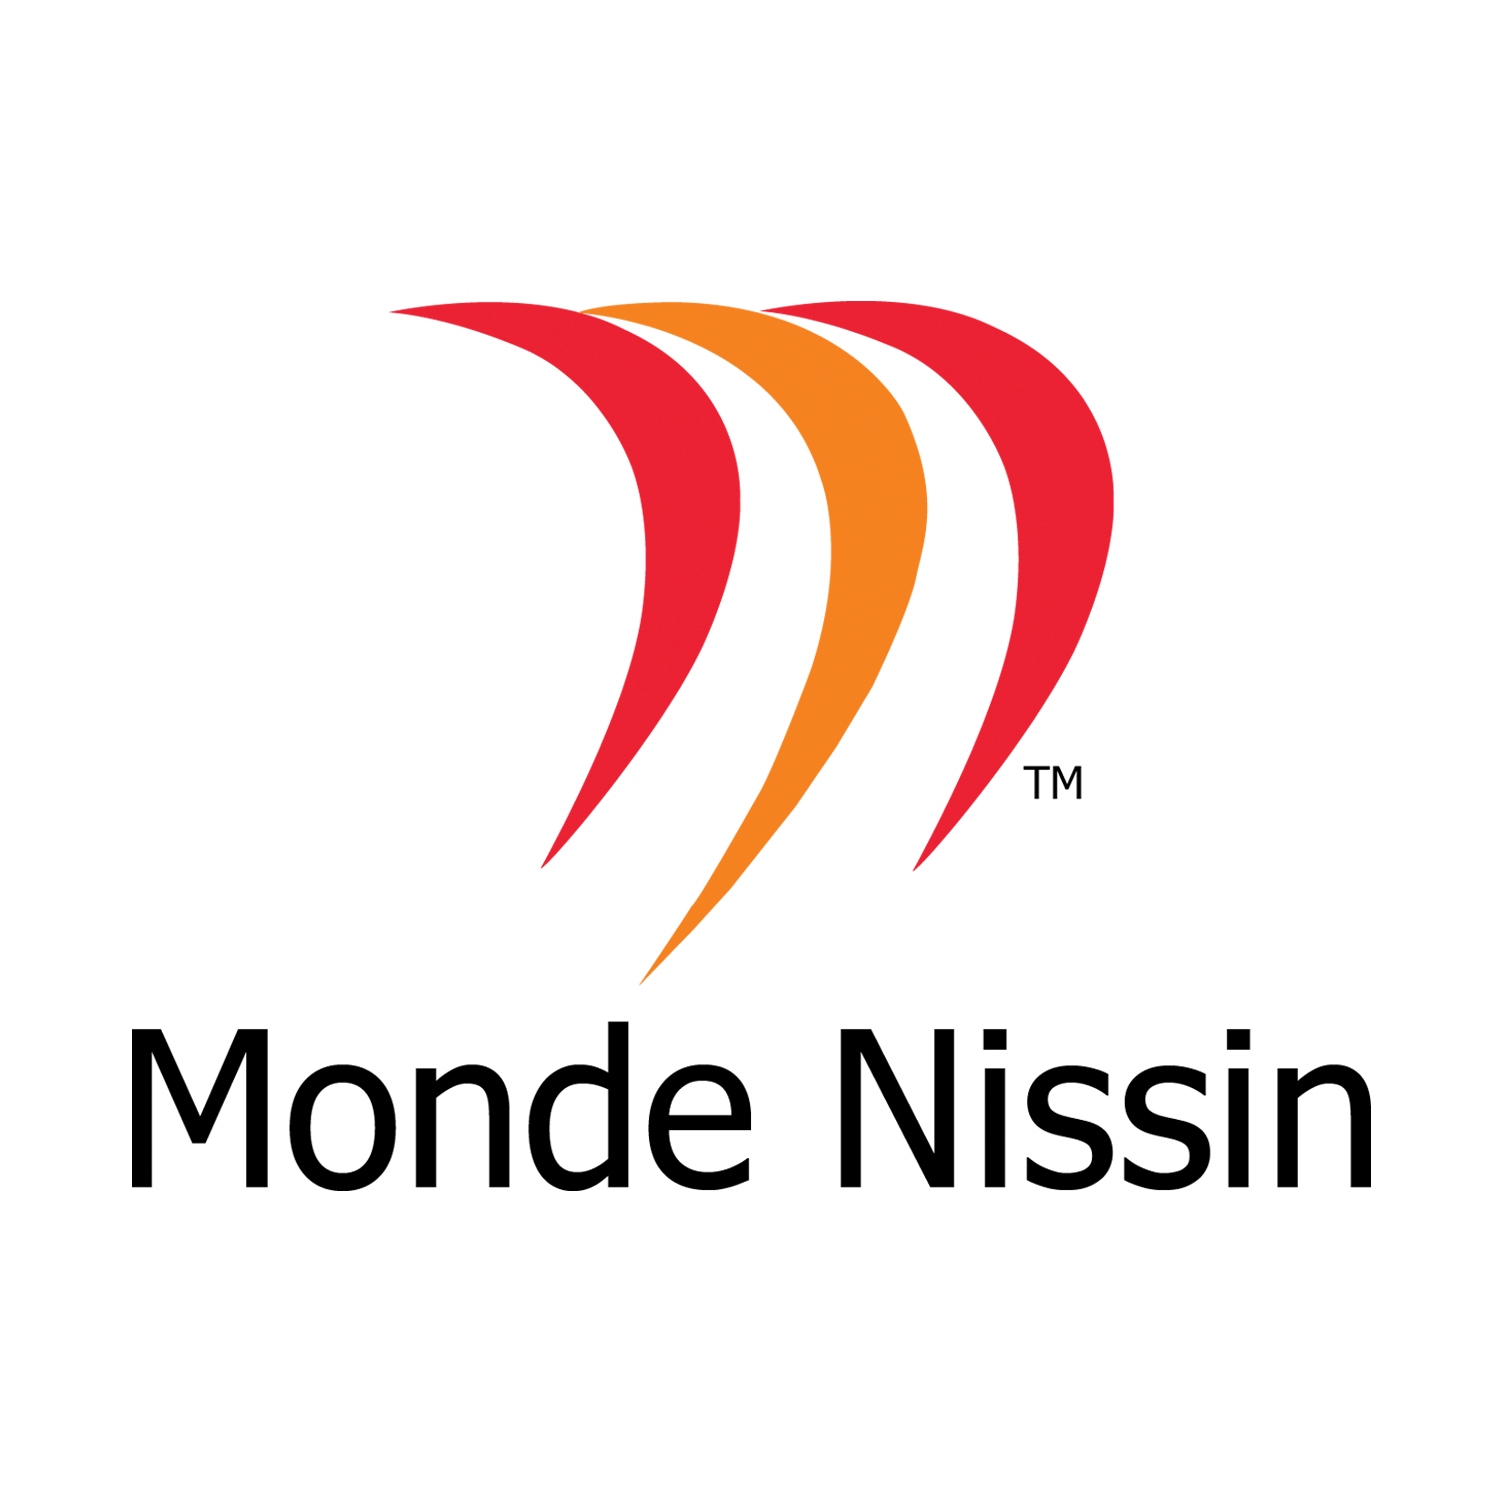 Nissin Logo - Monde Nissin | Logopedia | FANDOM powered by Wikia